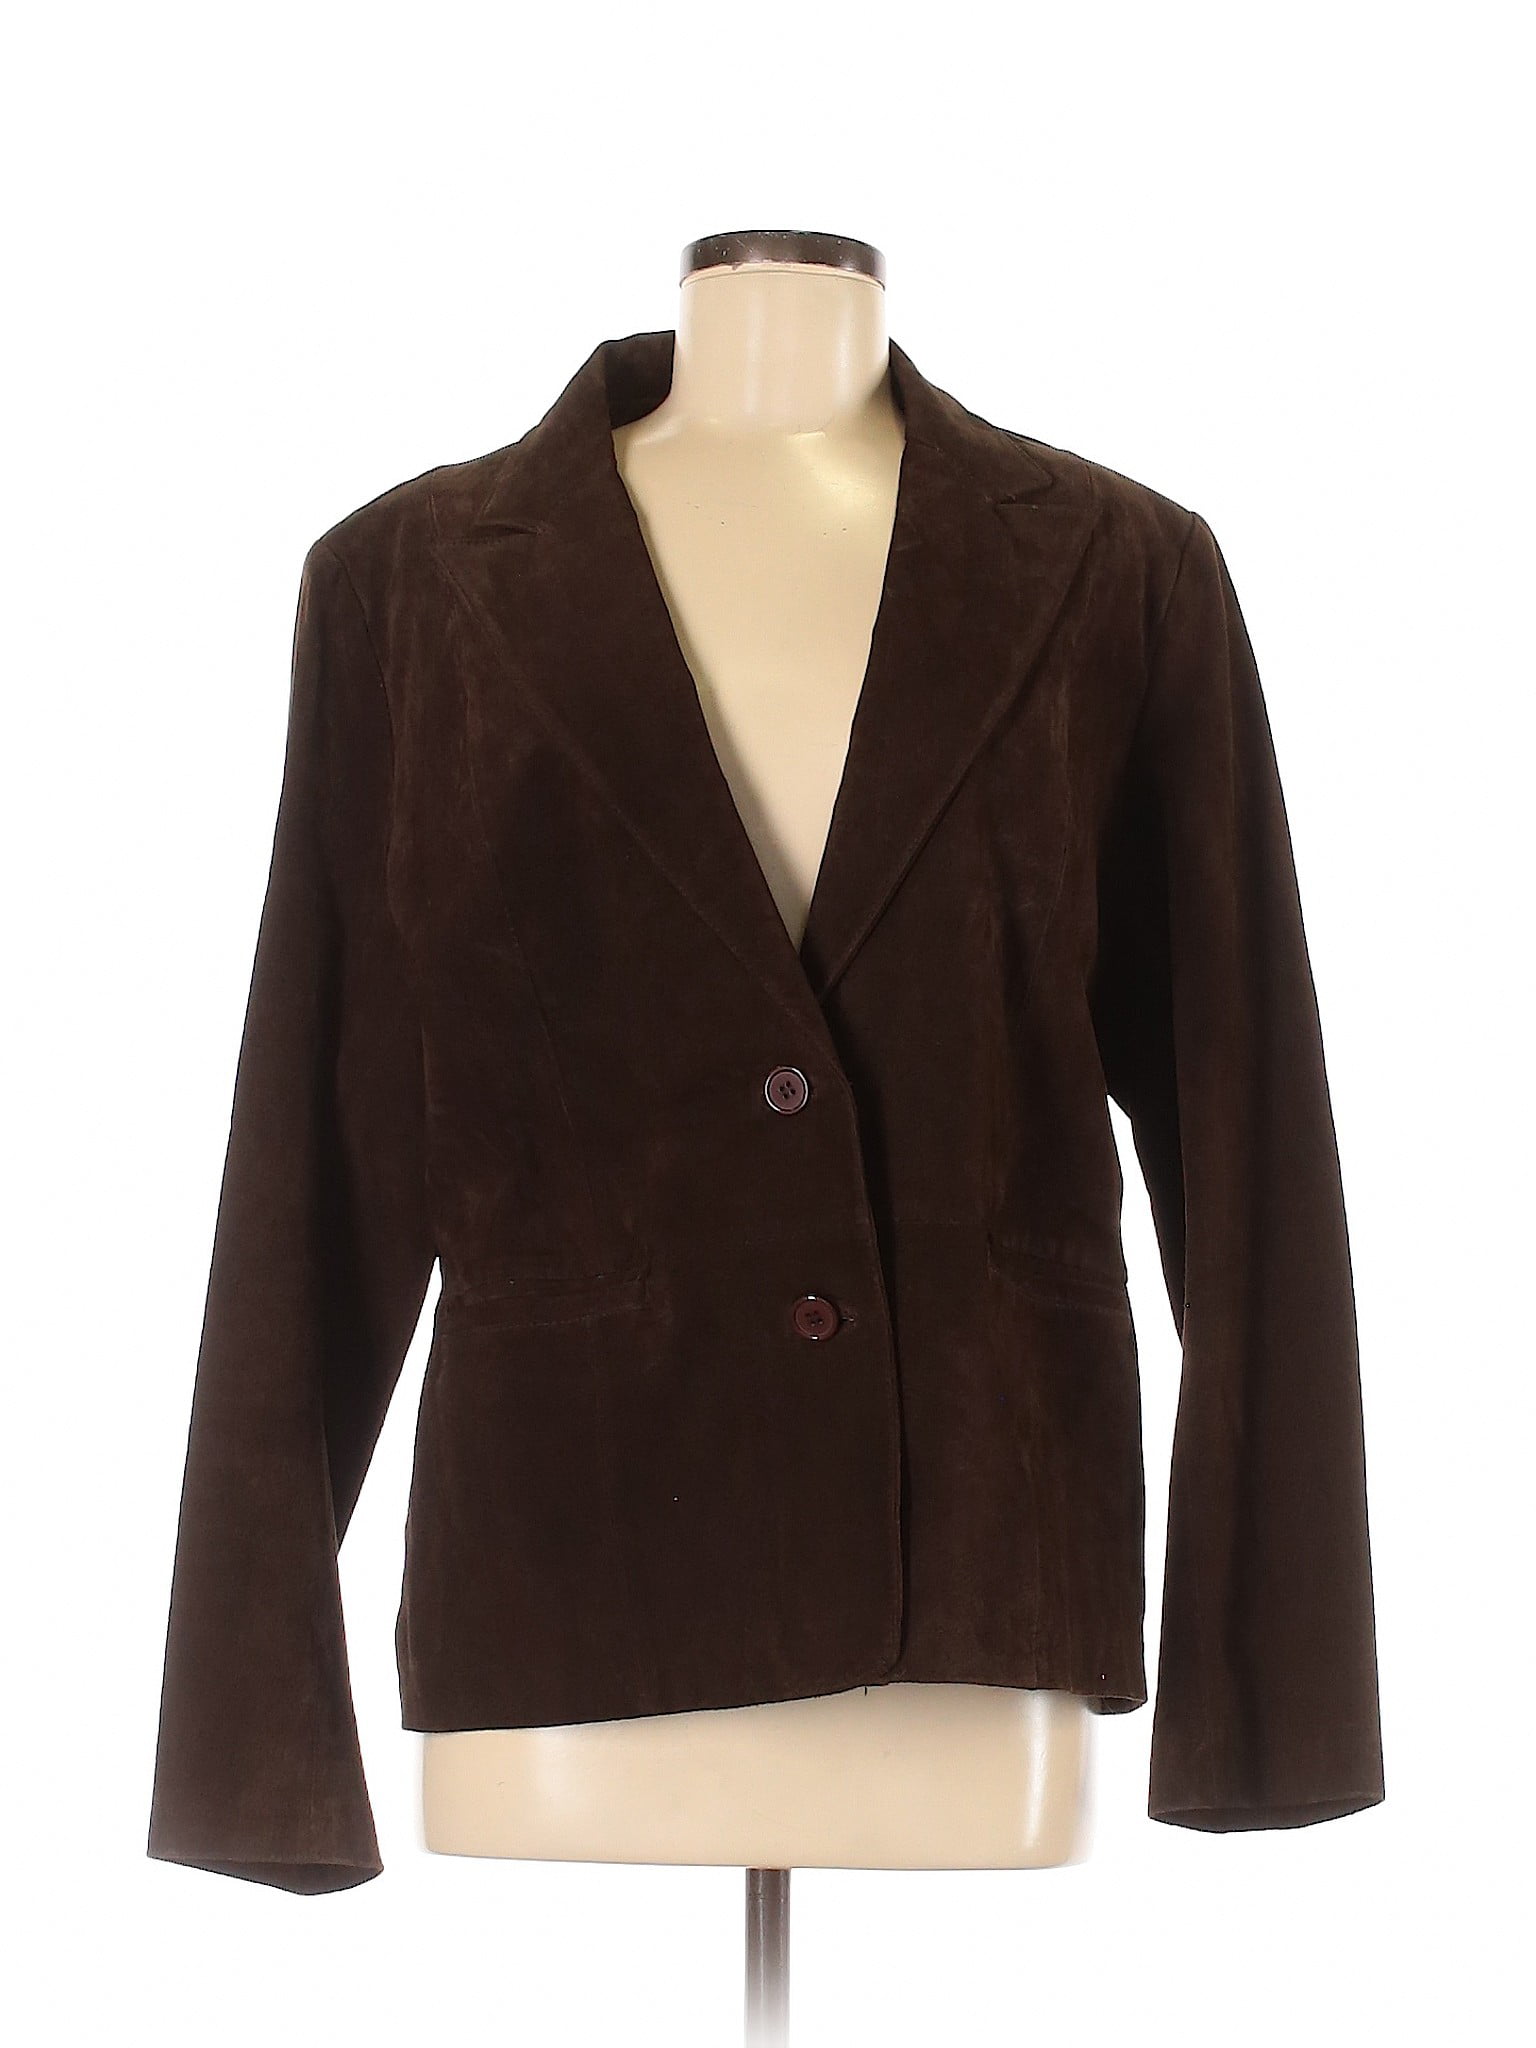 Bagatelle - Pre-Owned Bagatelle Women's Size 6 Leather Jacket - Walmart ...